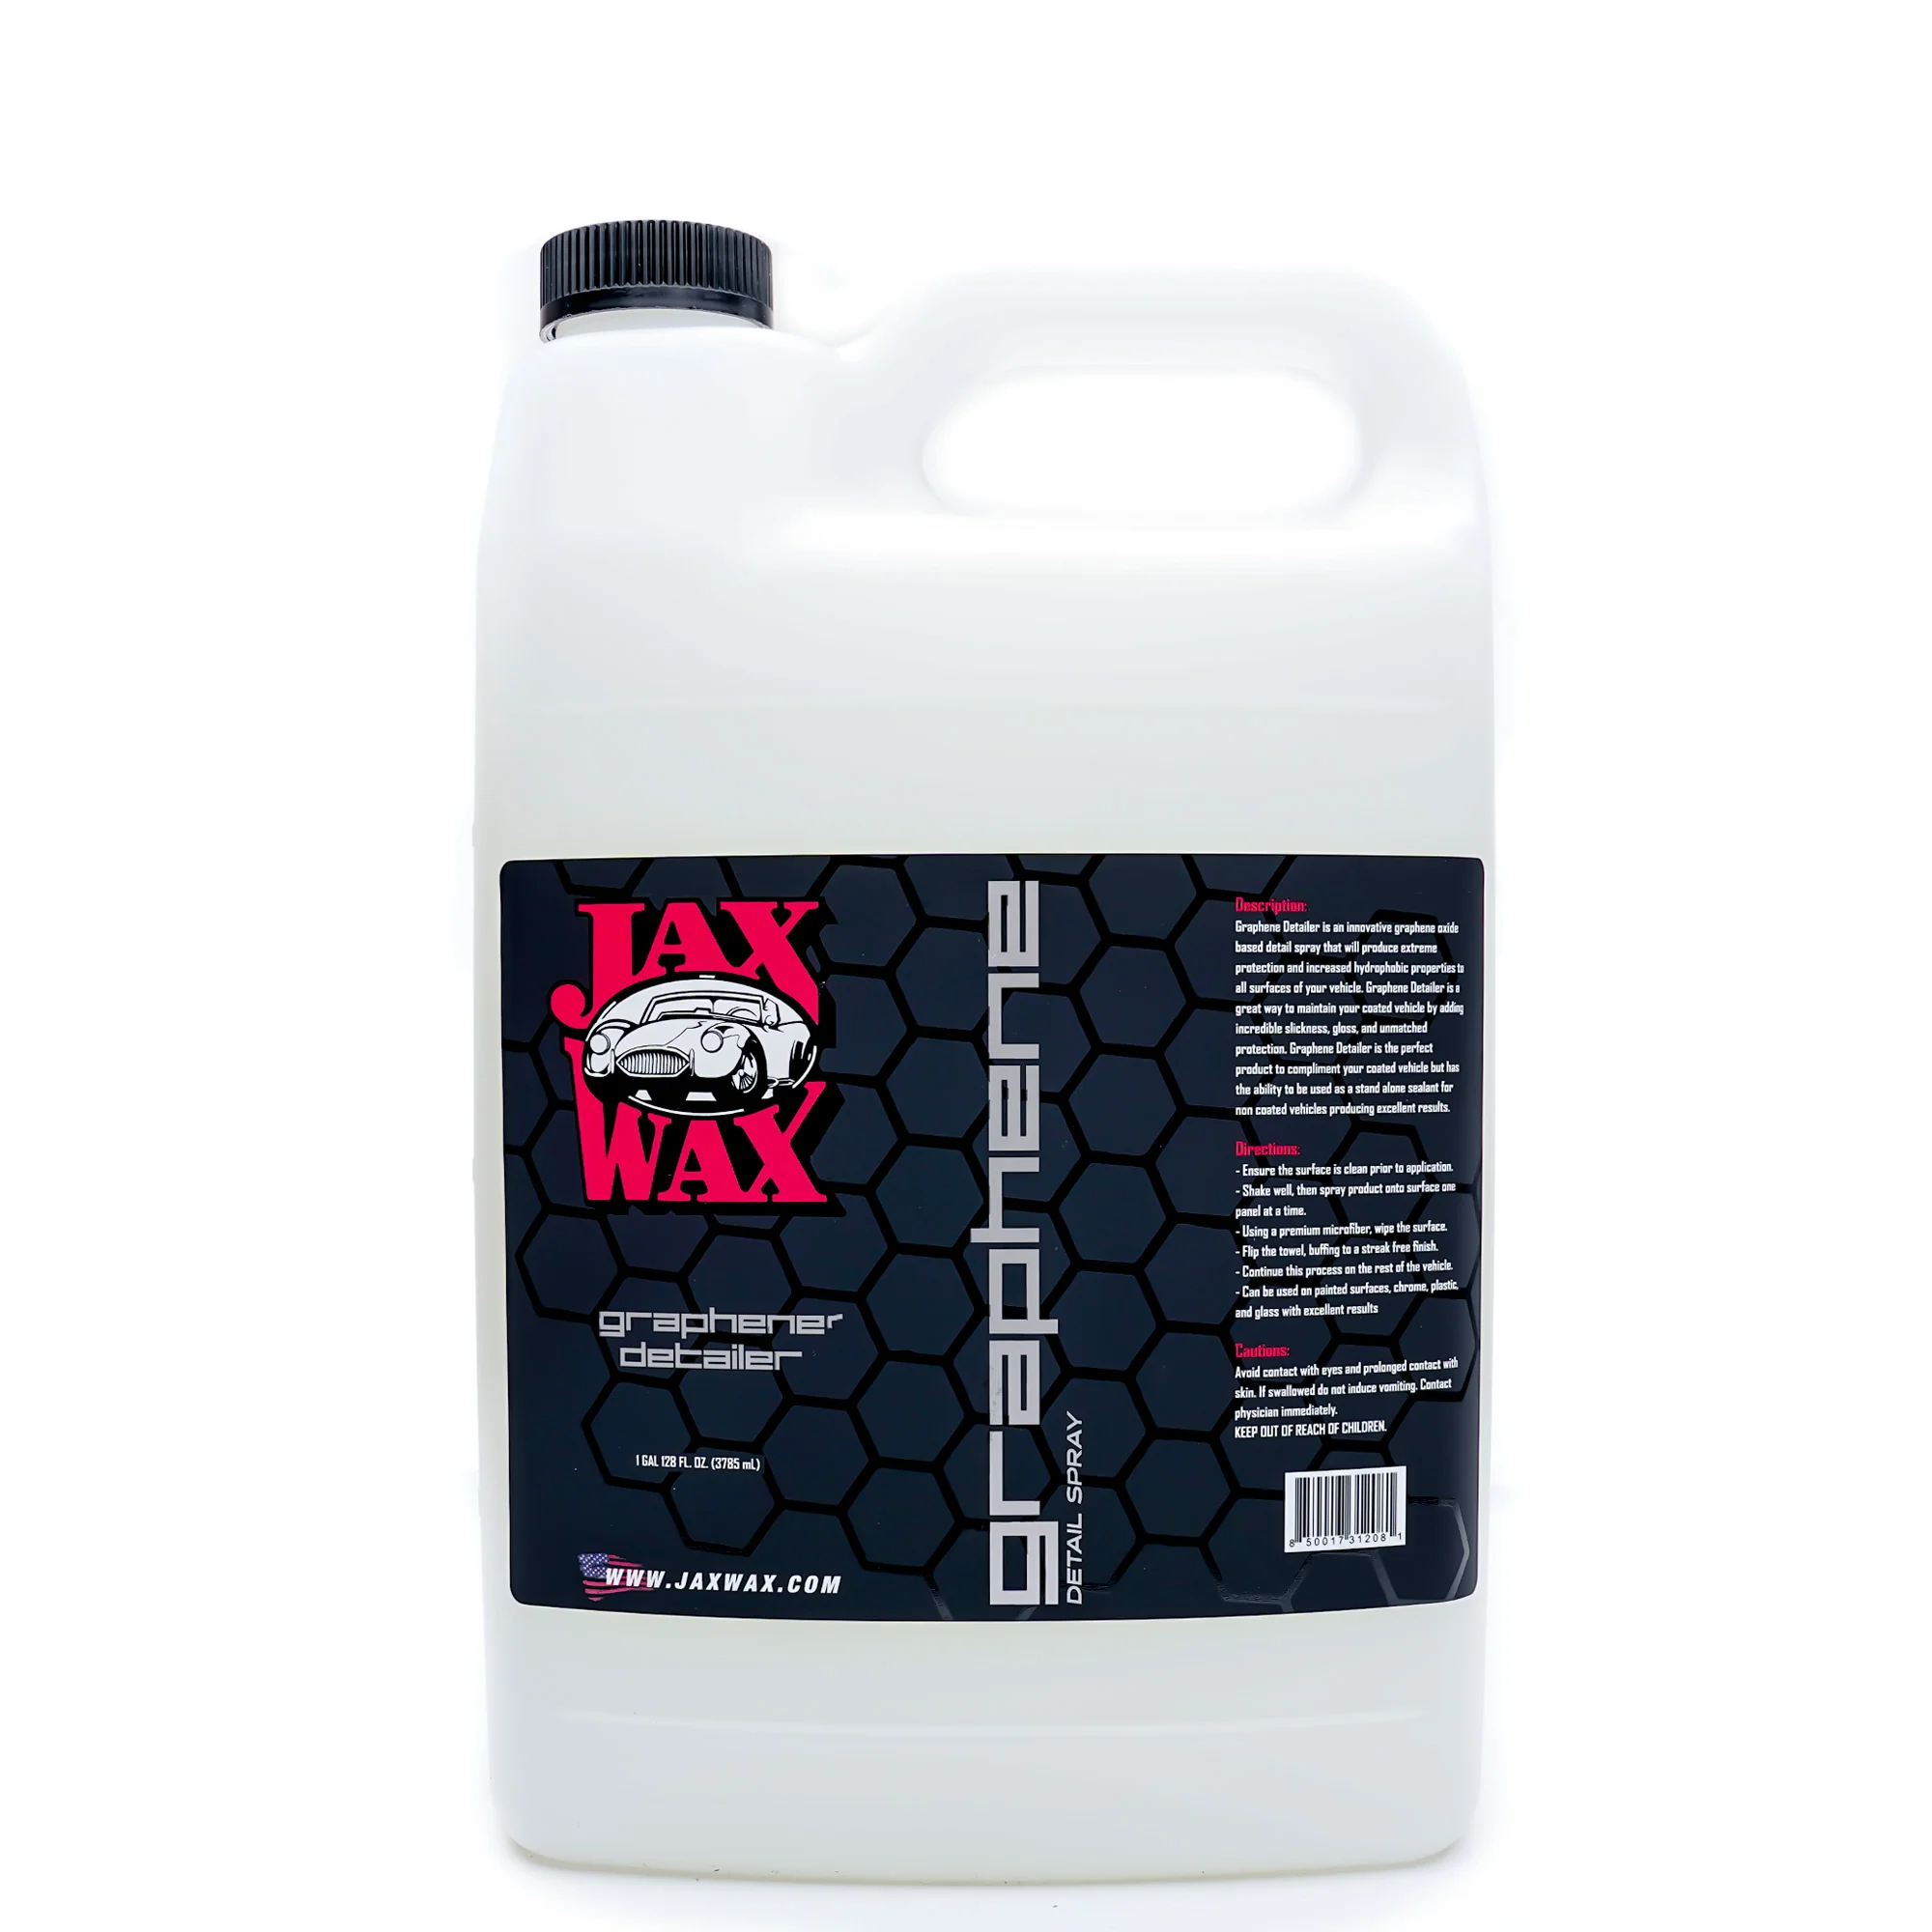 Jax Wax Ceramic Detailer